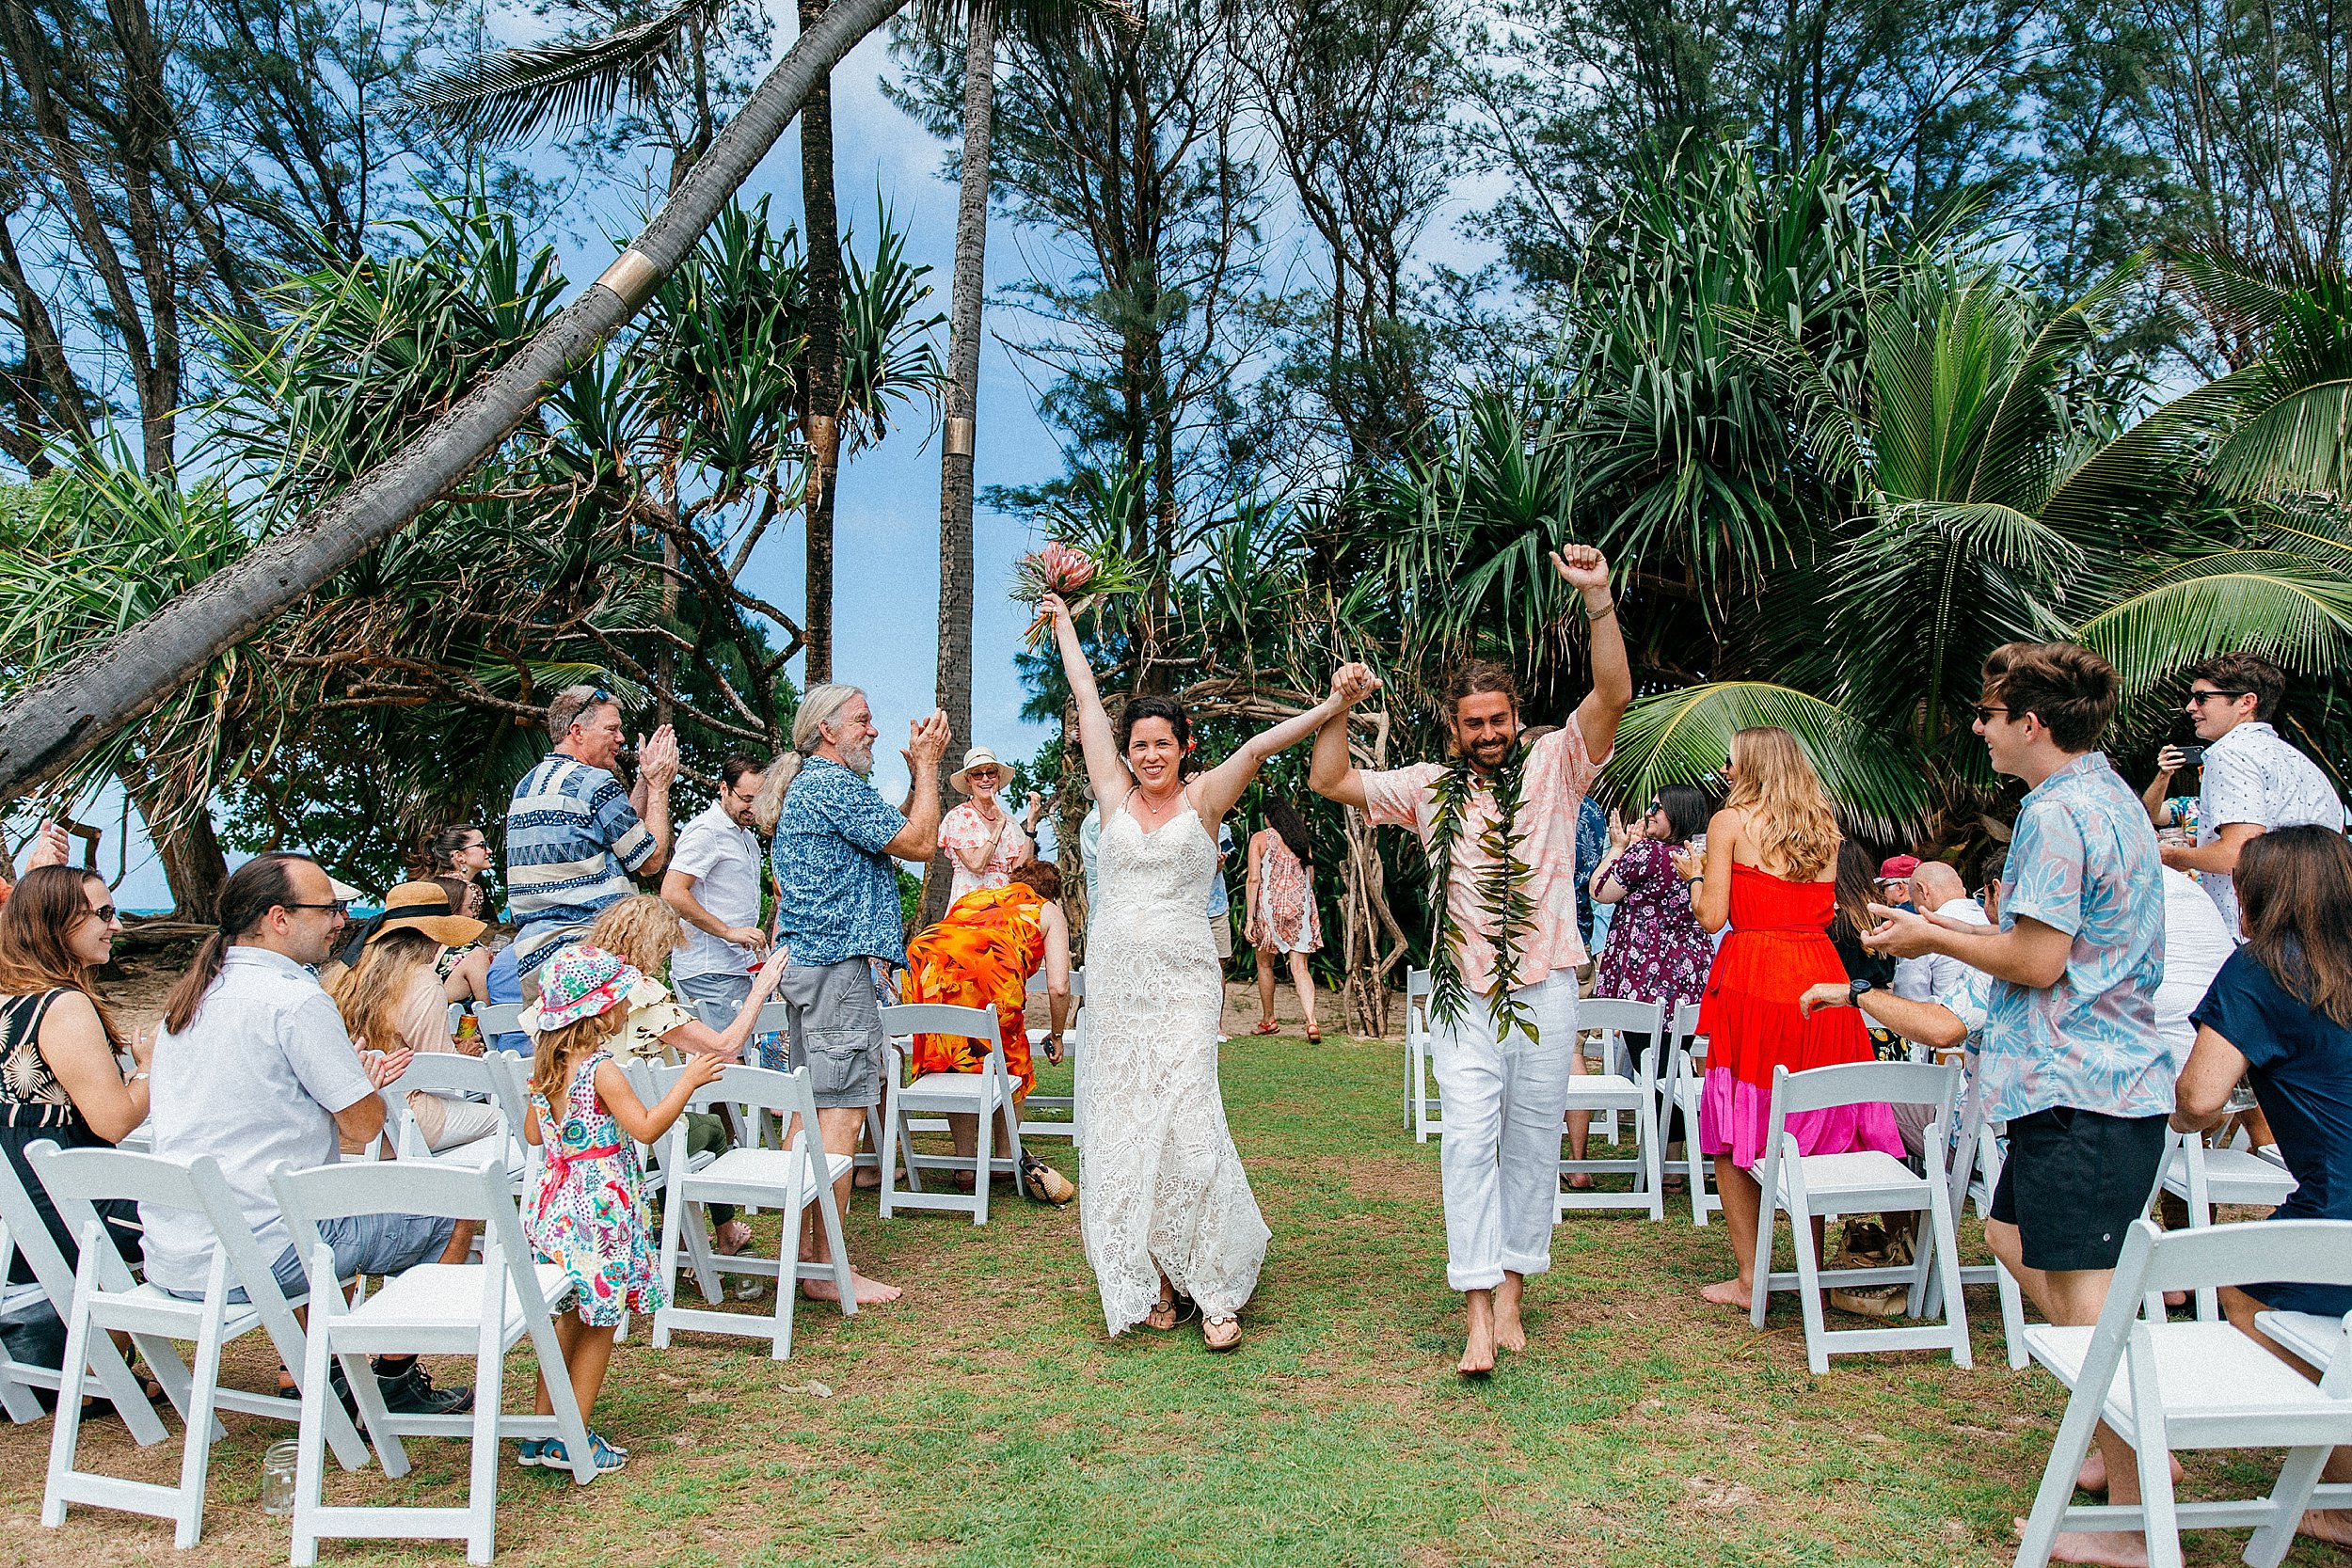  Backyard Hawaii Wedding on Oahu's North Shore - Pounders Beach 